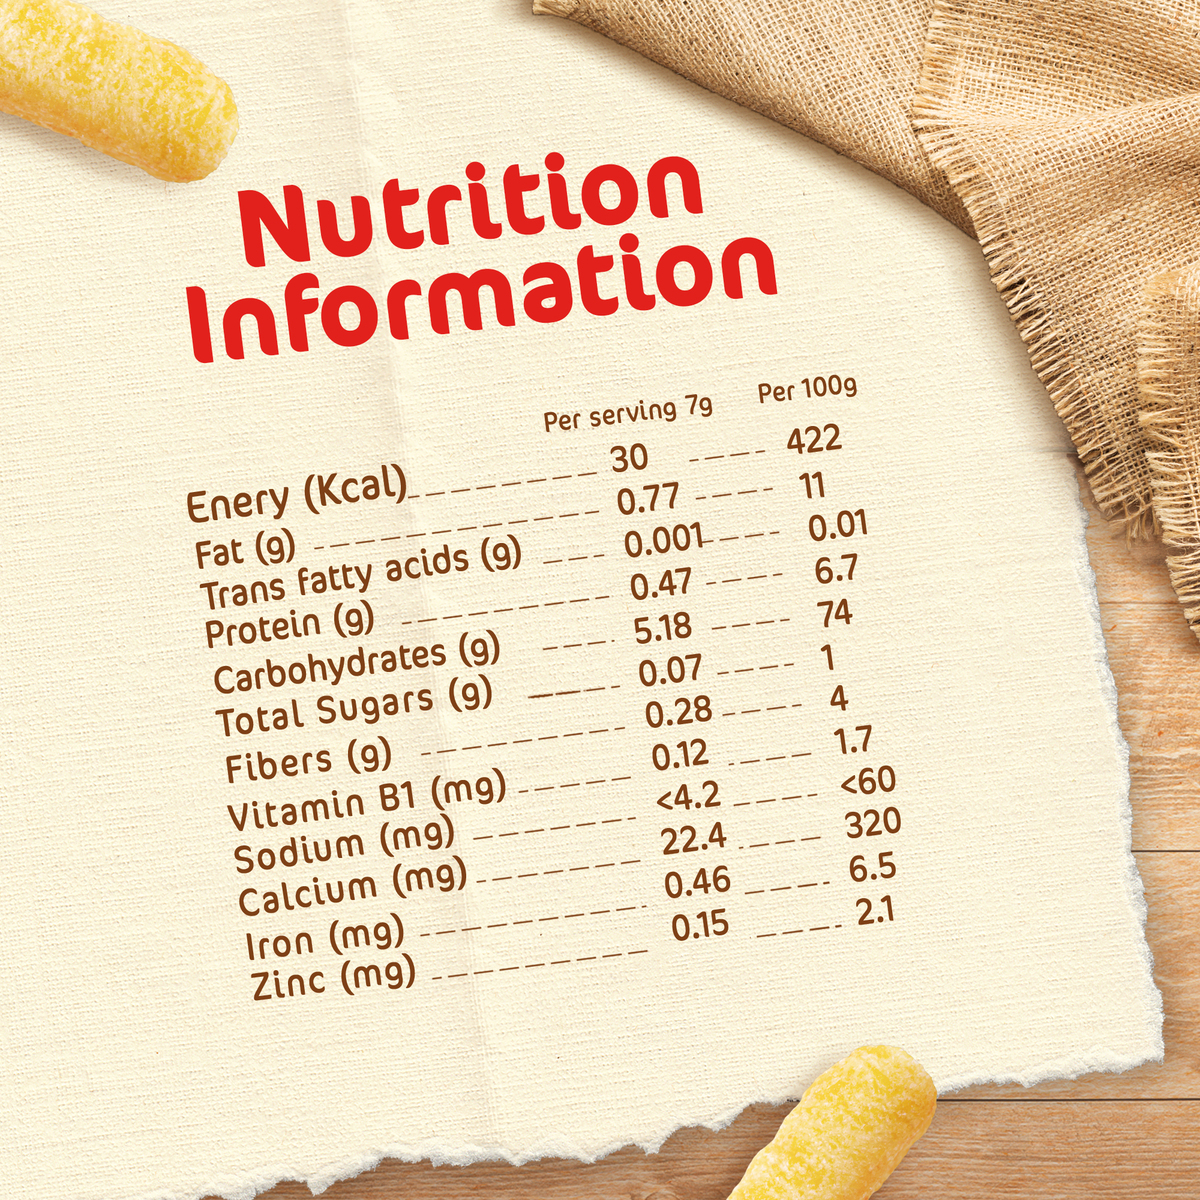 Nestle Cerelac Corn Nutri Puffs, 28 g